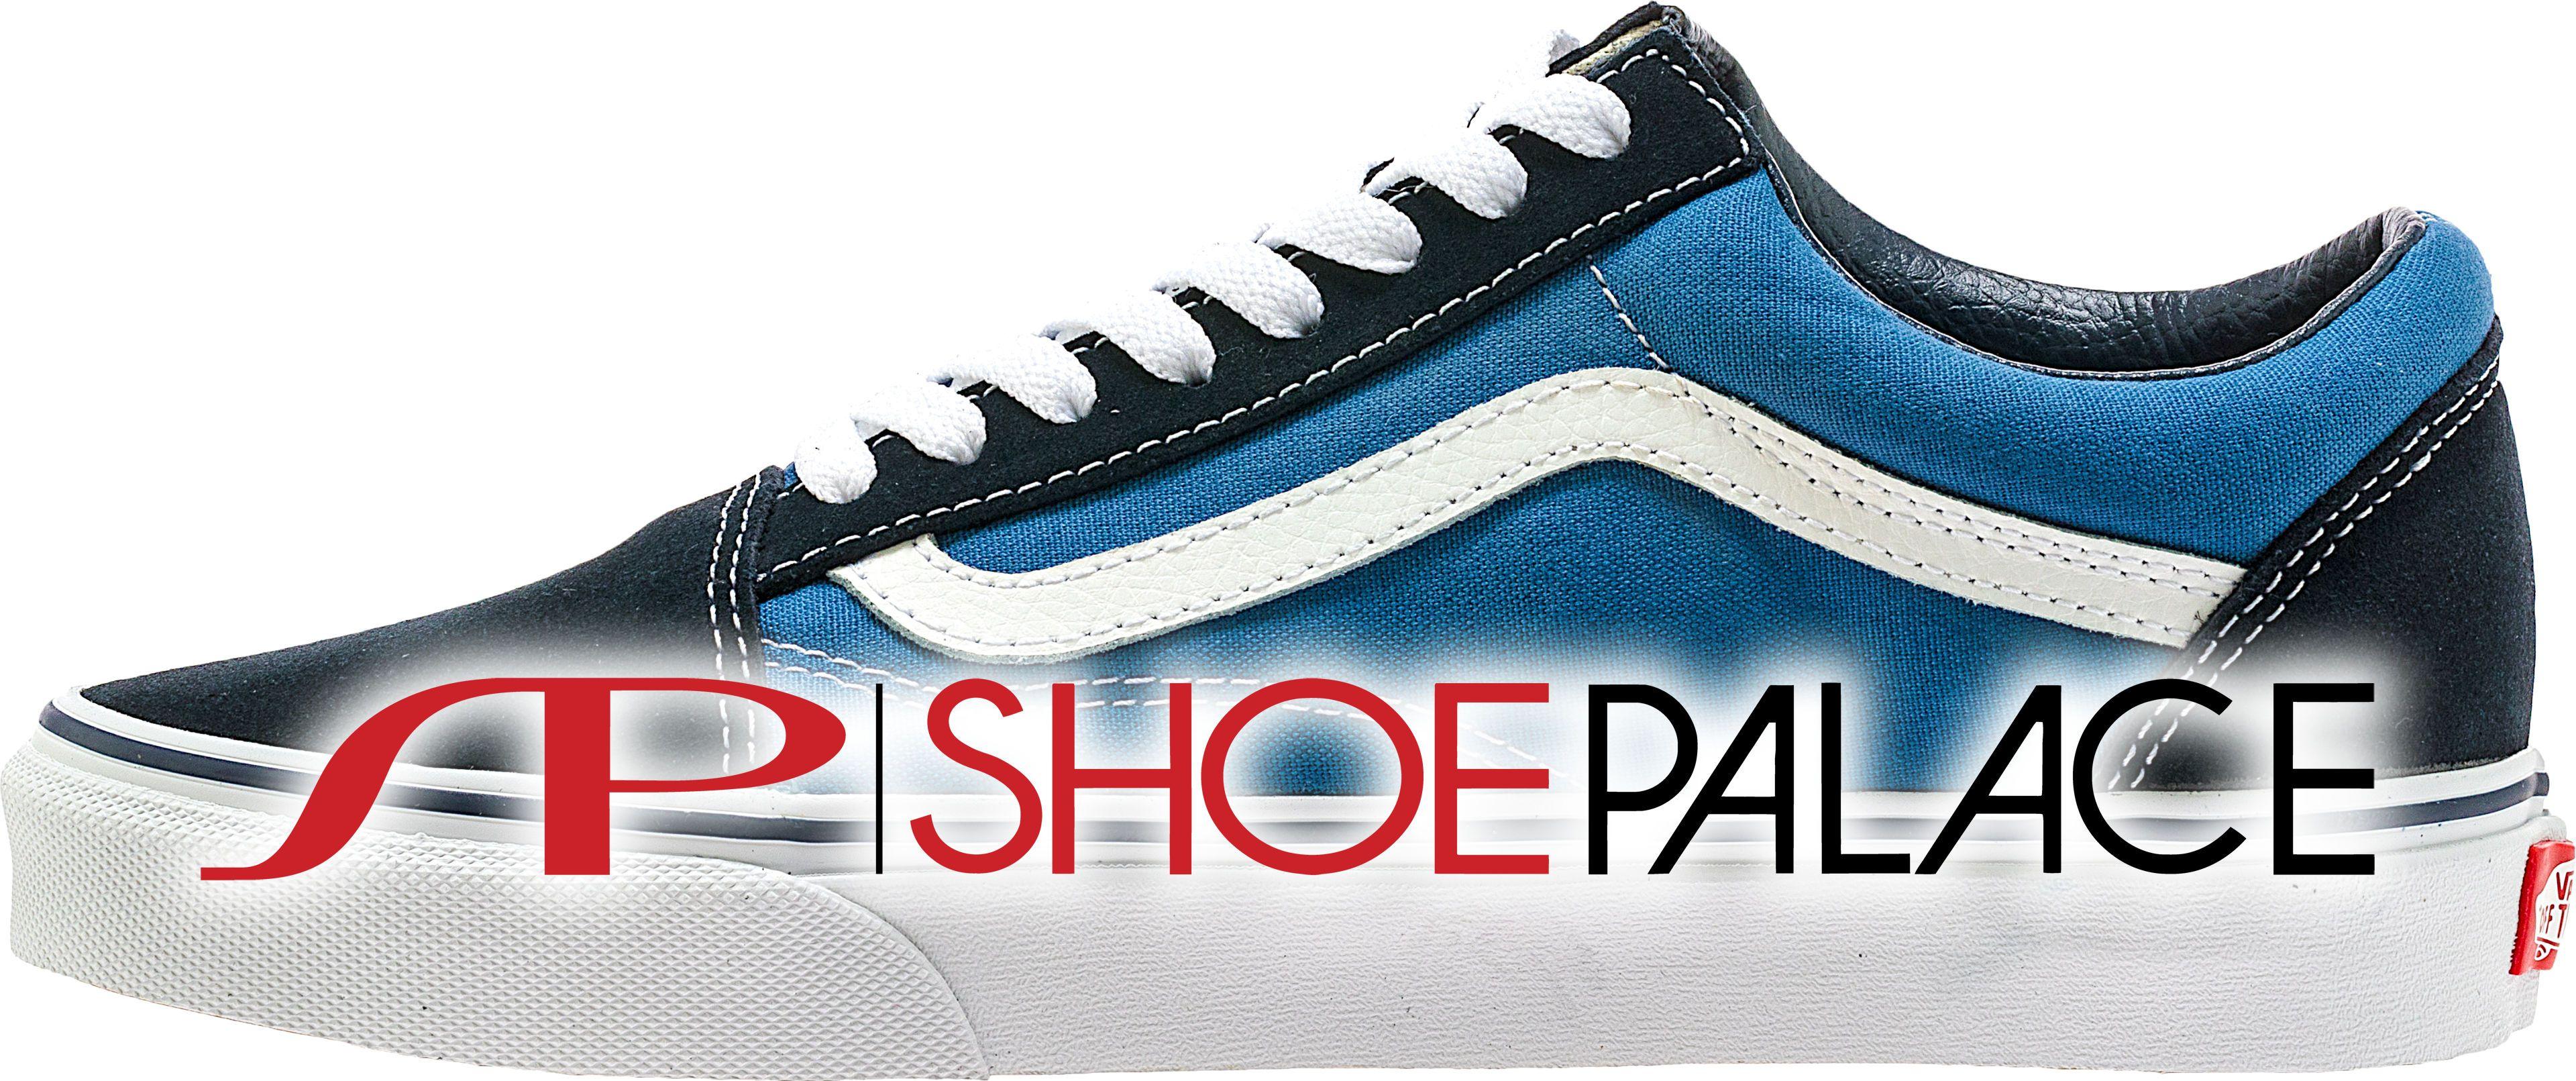 White and Blue Shoe Brand Logo - Vans D3HNVY Old Skool Low Mens Skate Shoe (Navy Blue/White) at Shoe ...